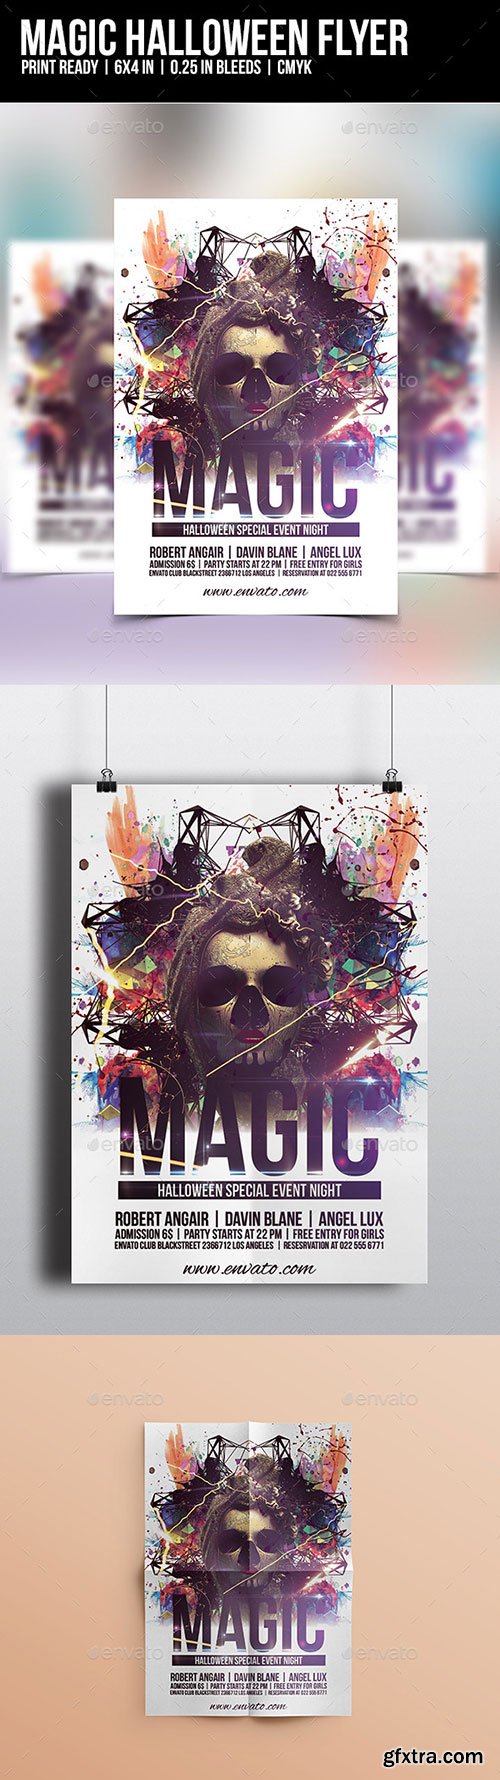 GraphicRiver - Magic Halloween Flyer Template 8952869